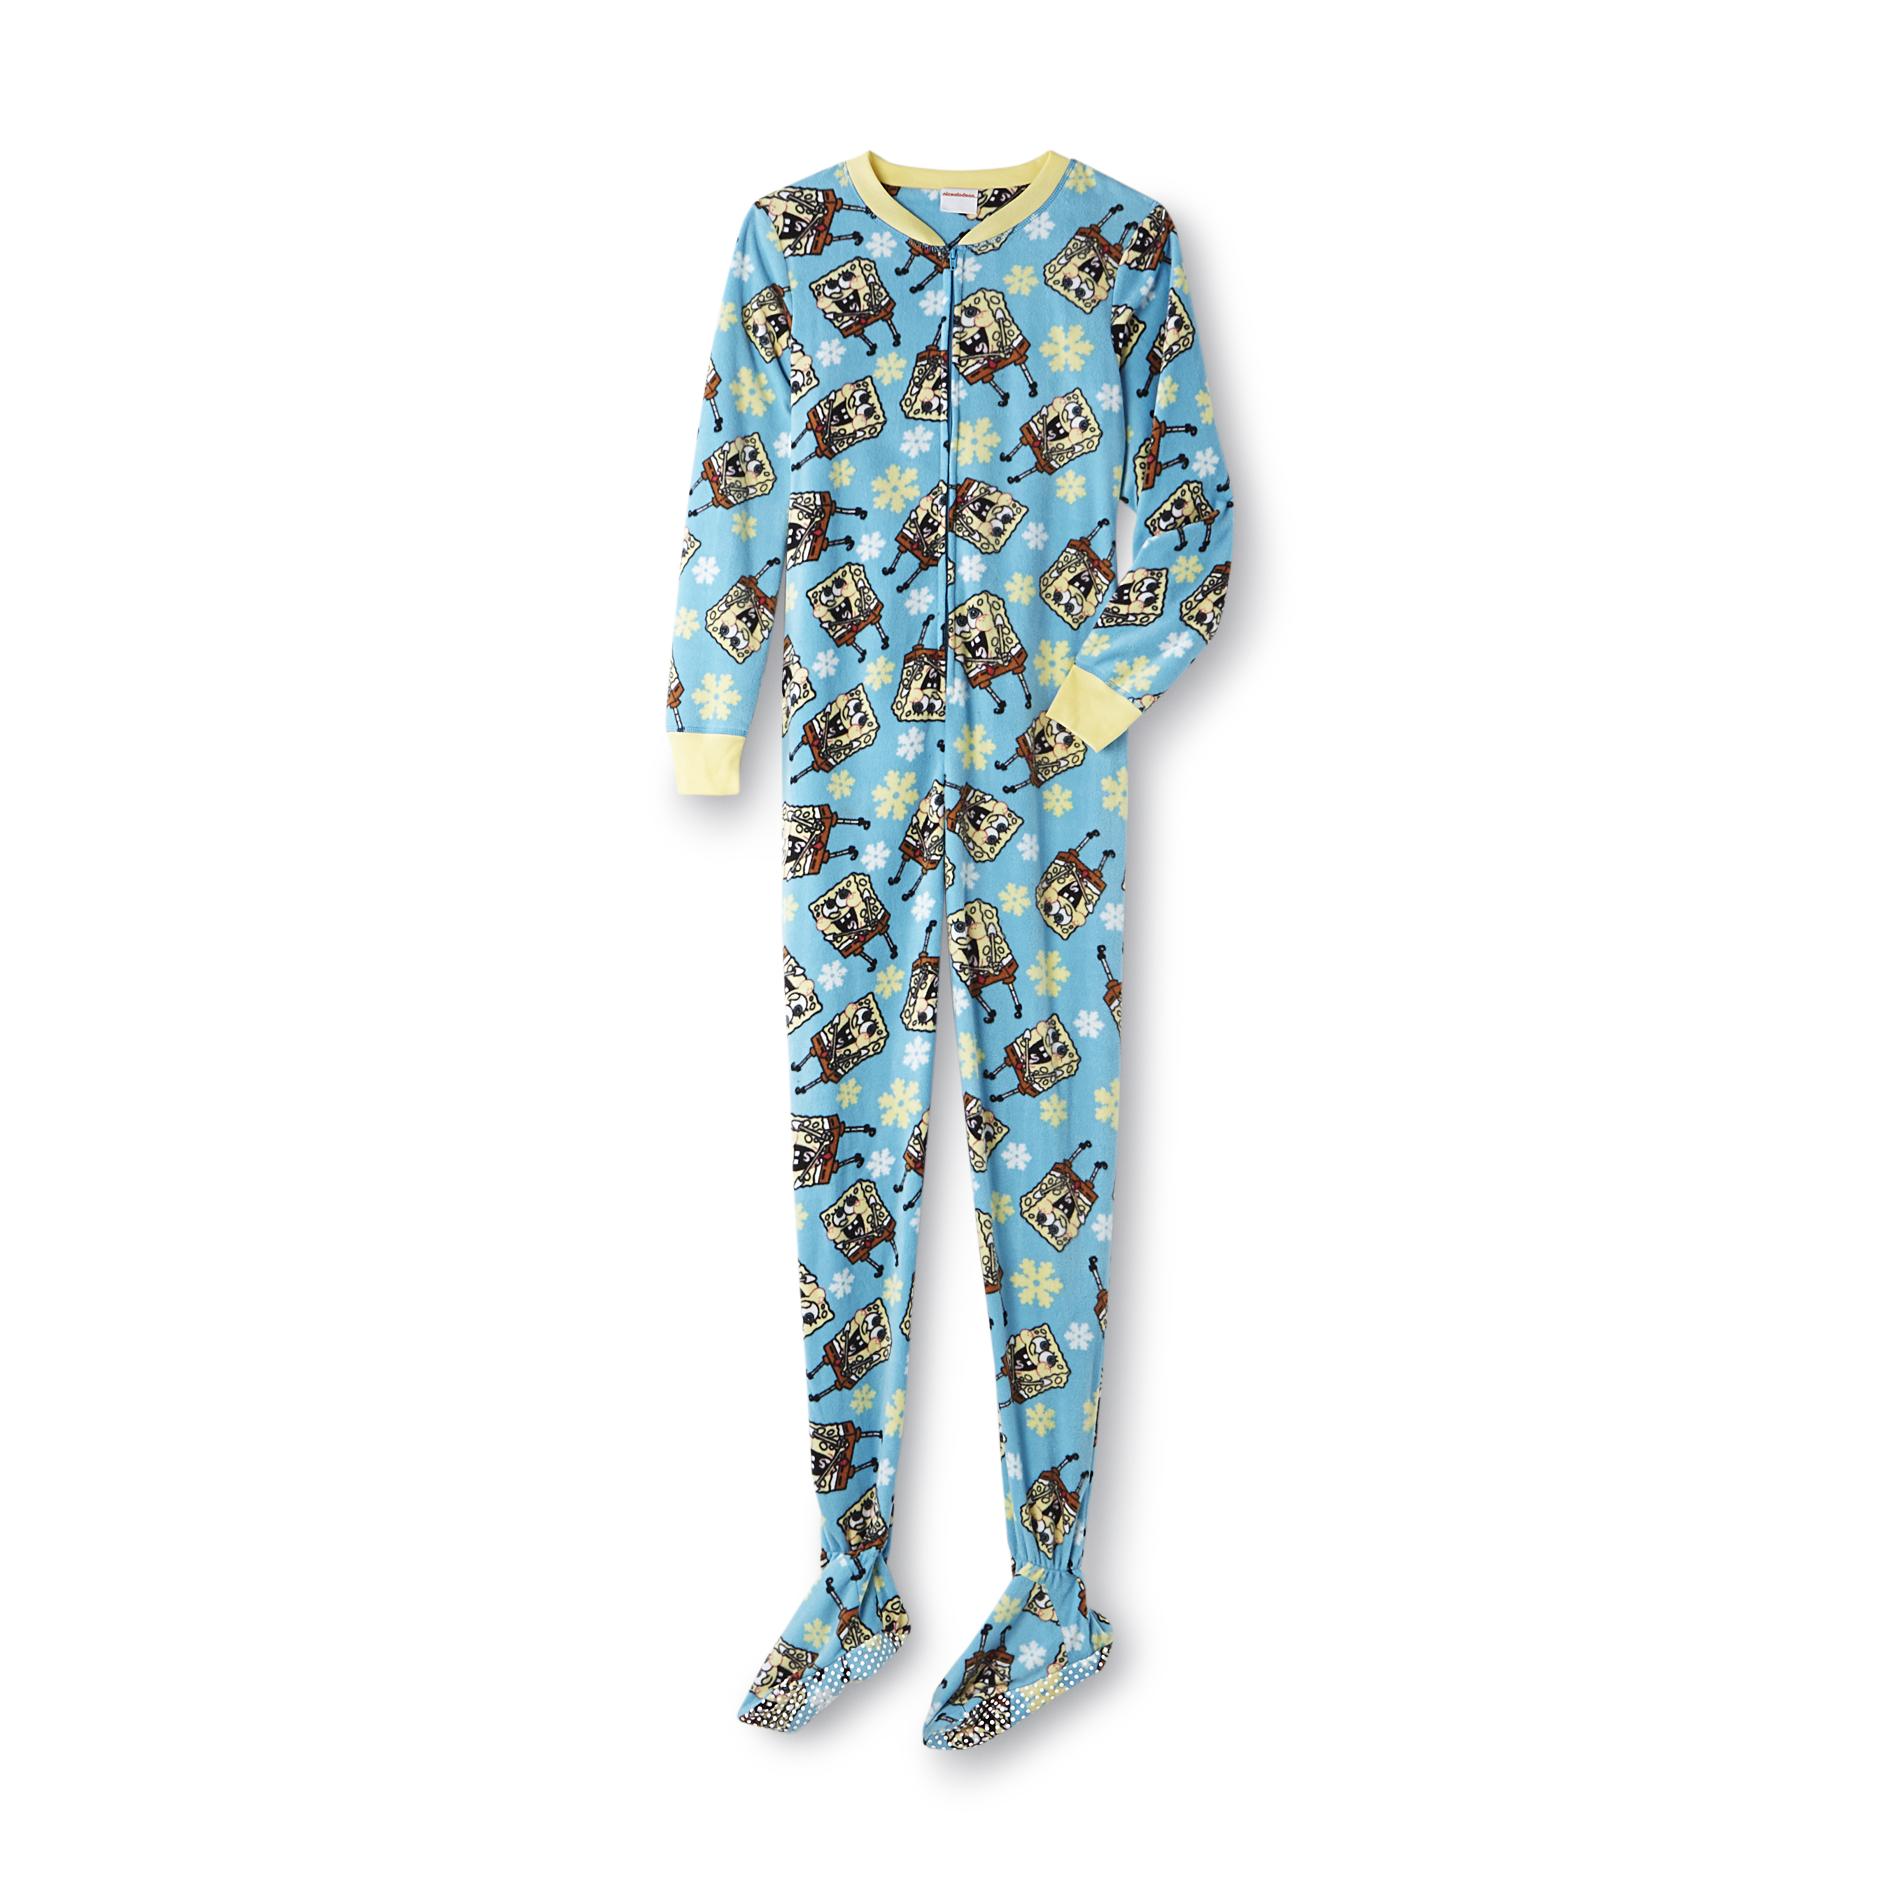 Nickelodeon Women's Fleece Footed Pajamas